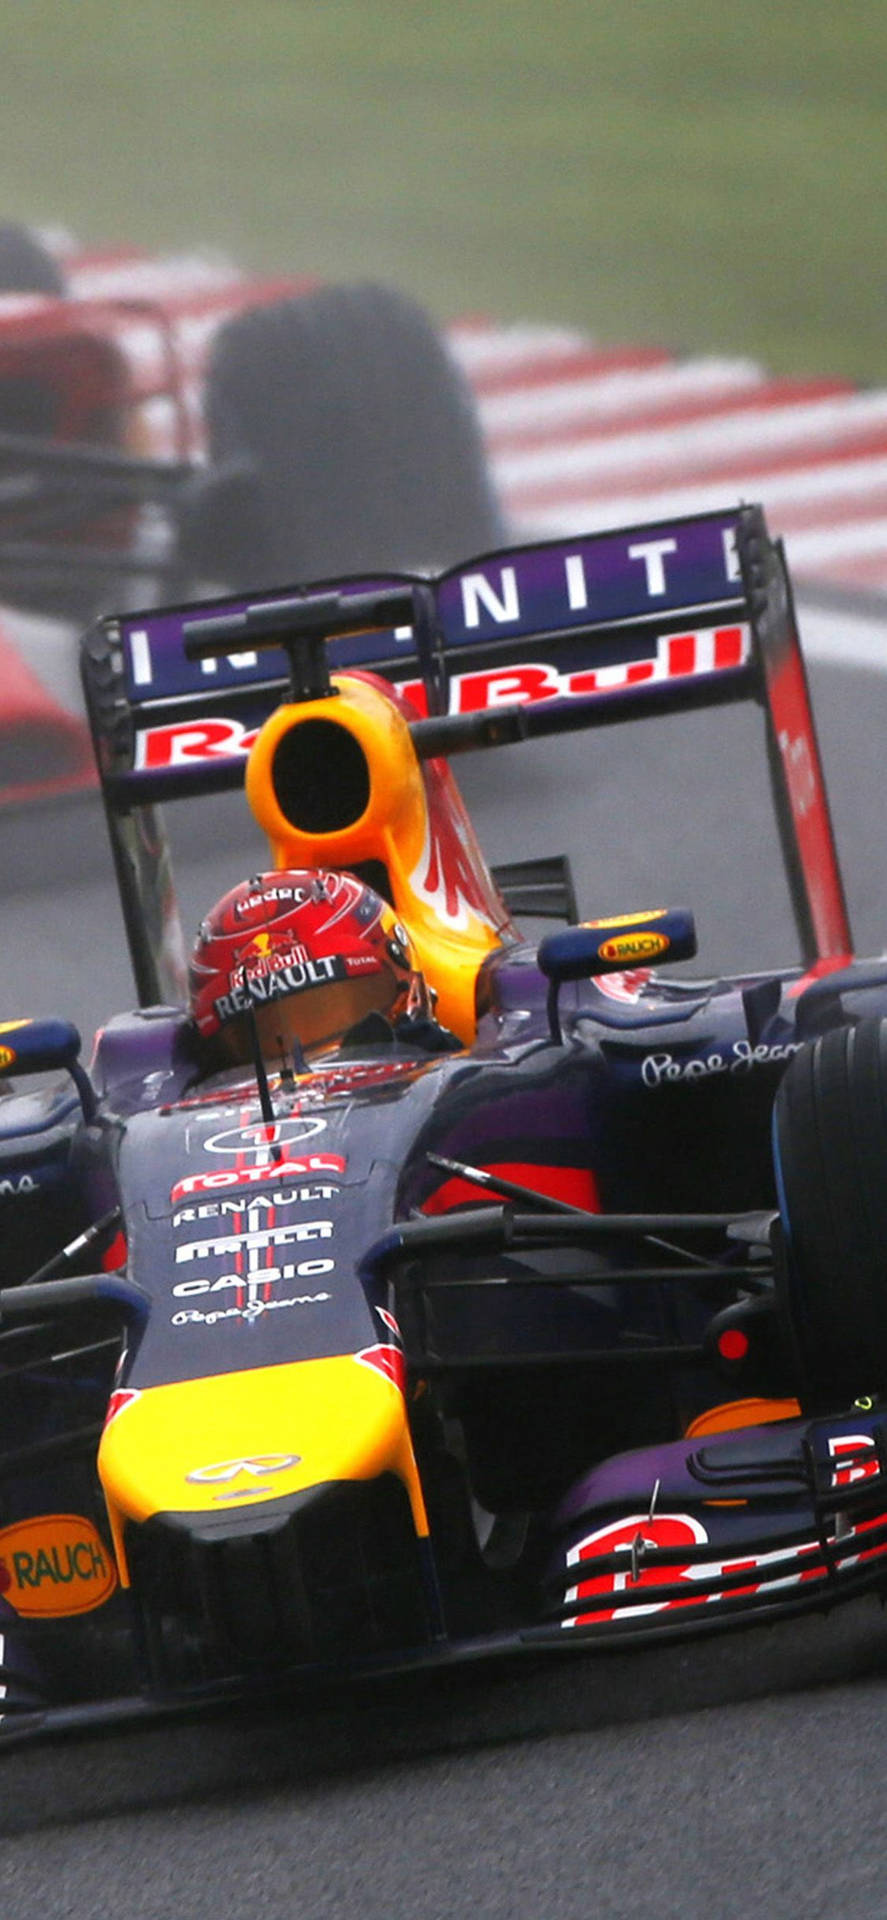 F1 Daniel Ricciardo Racing Iphone Background